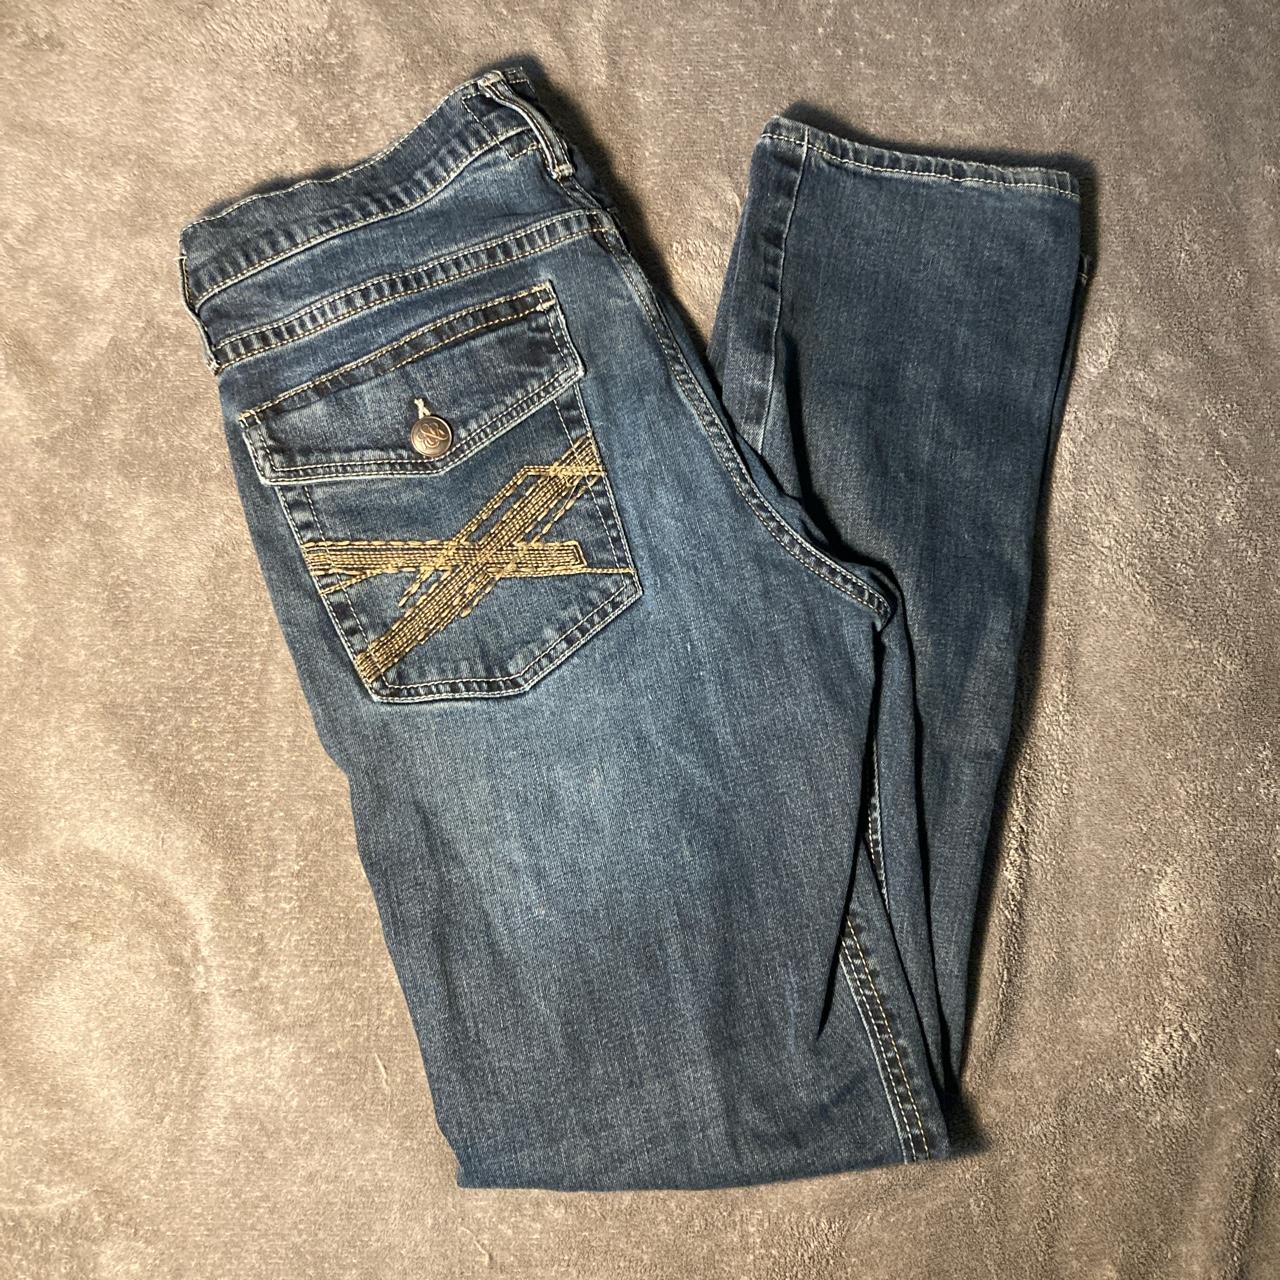 Rock & Republic Y2K jeans • Size: 33x32 - These... - Depop